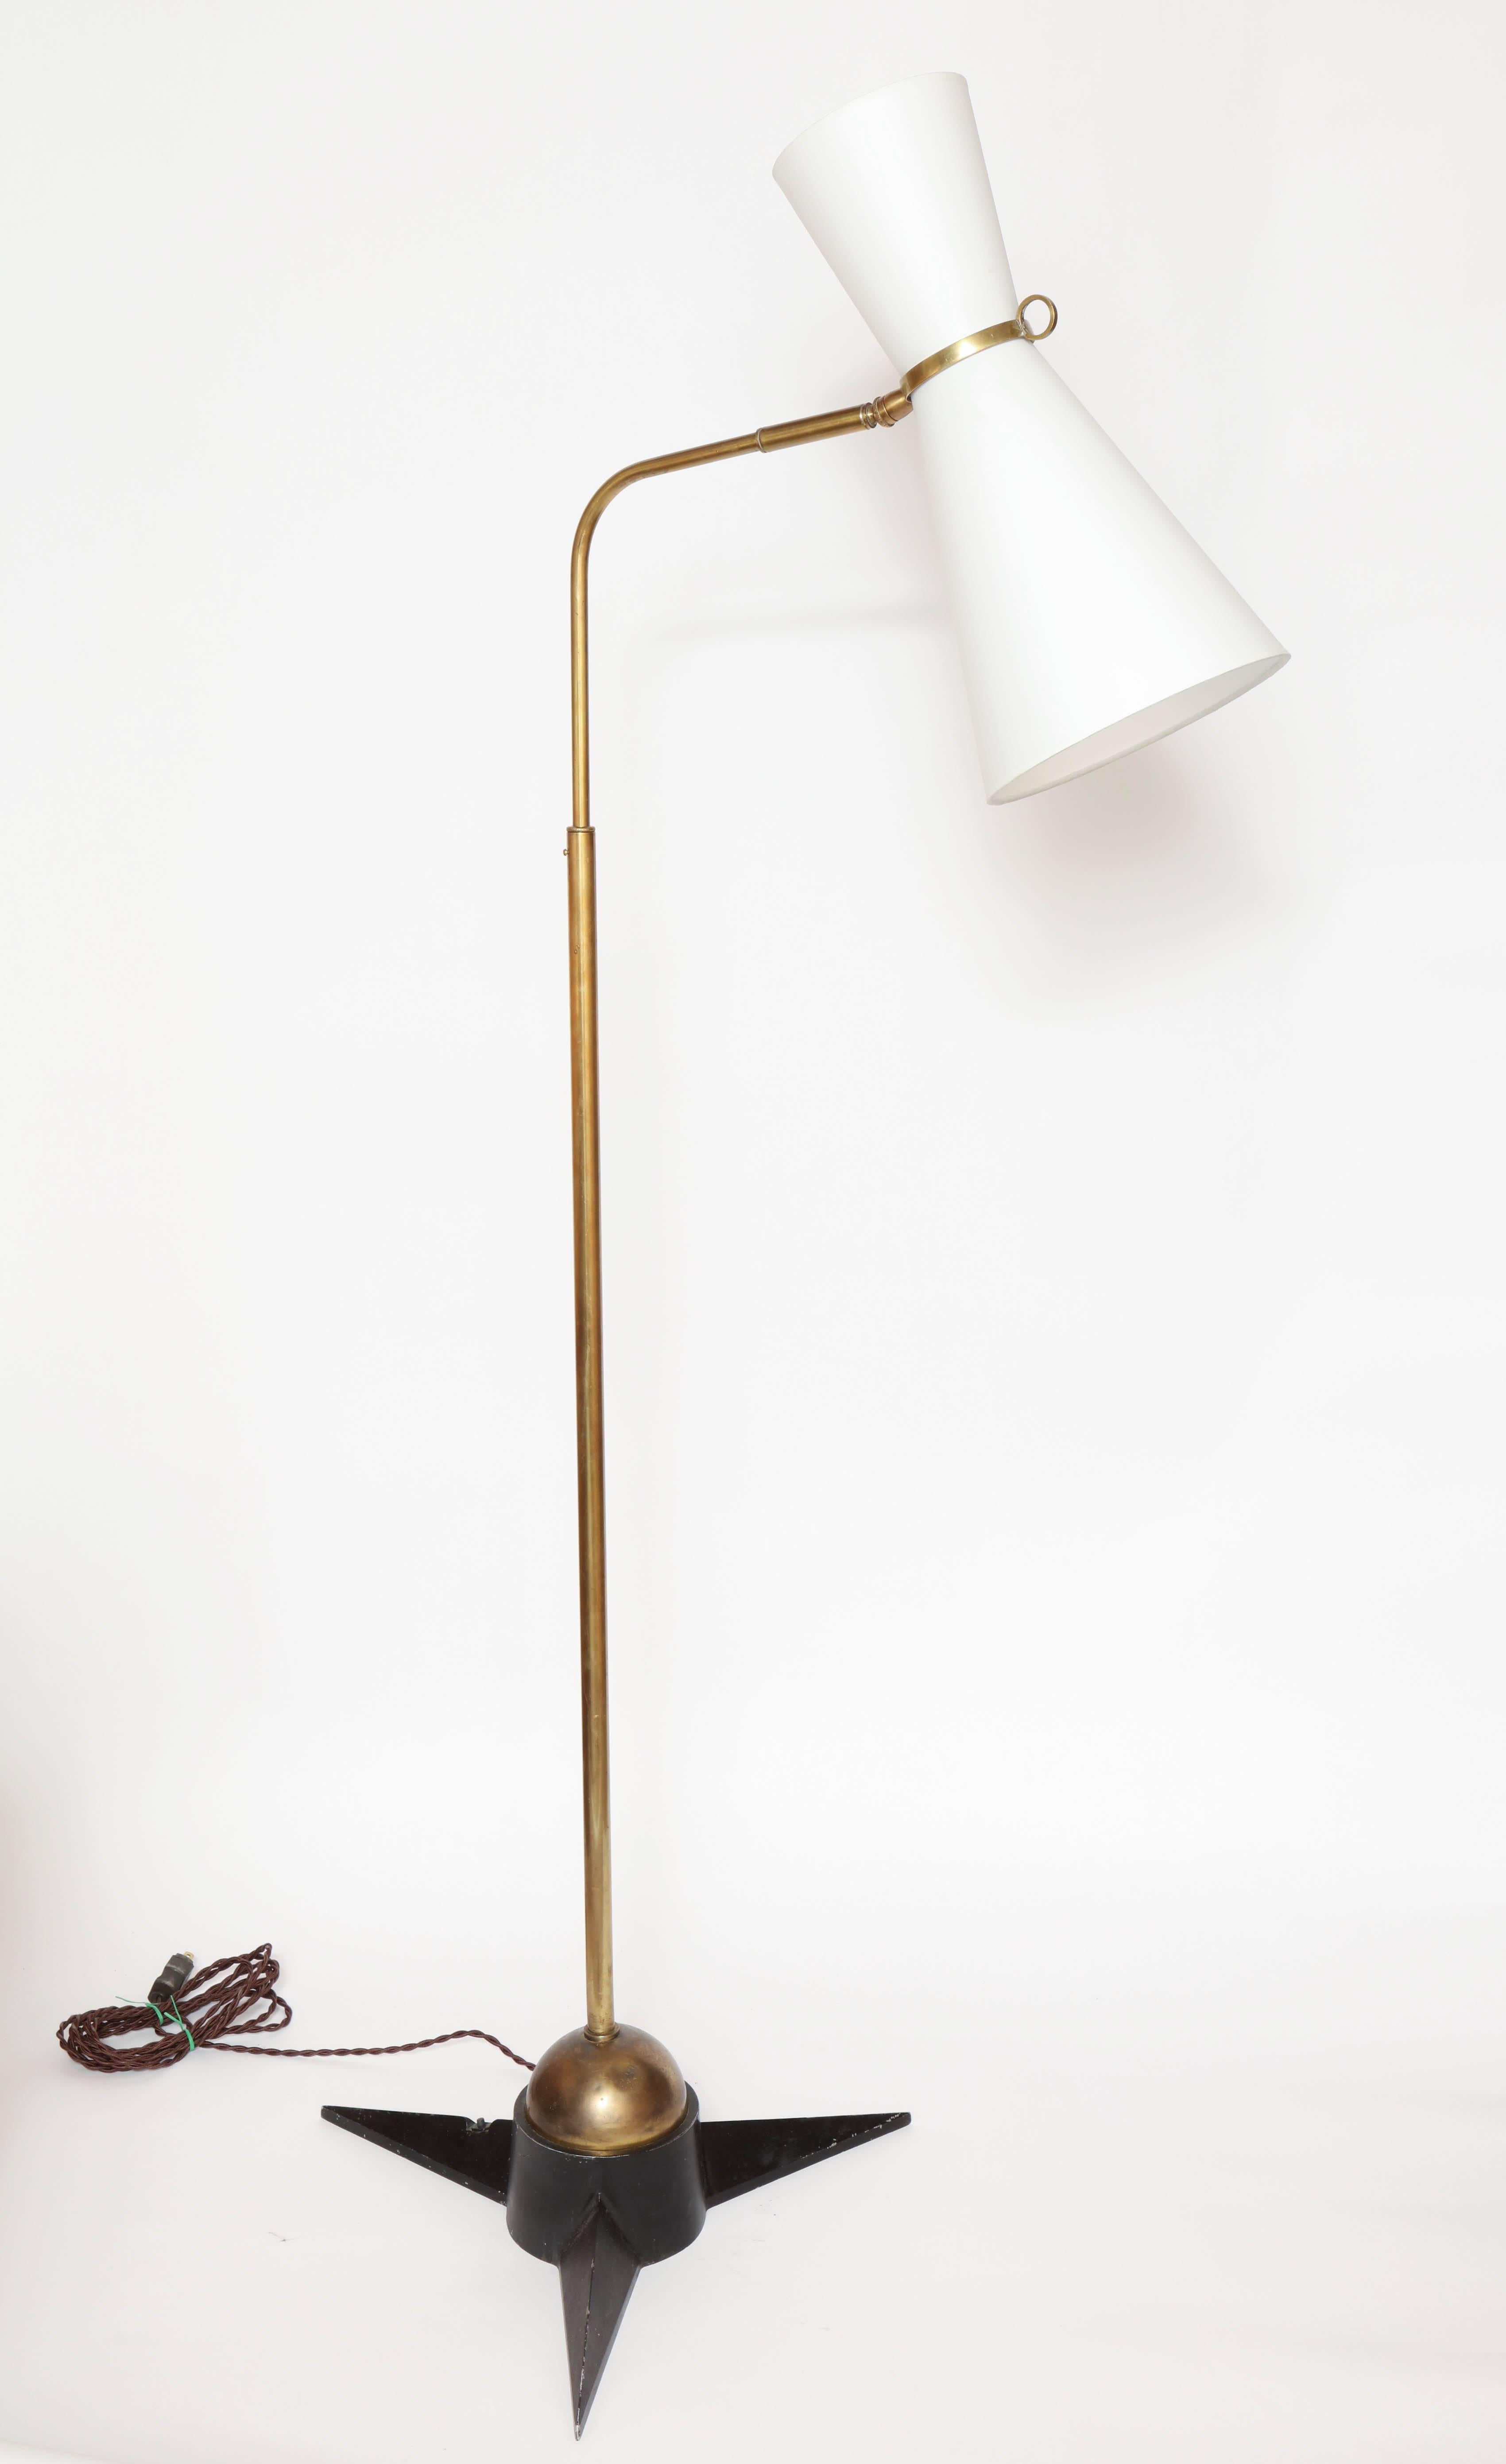 French Robert Mathieu Articulated Floor Lamp, 1950s, France